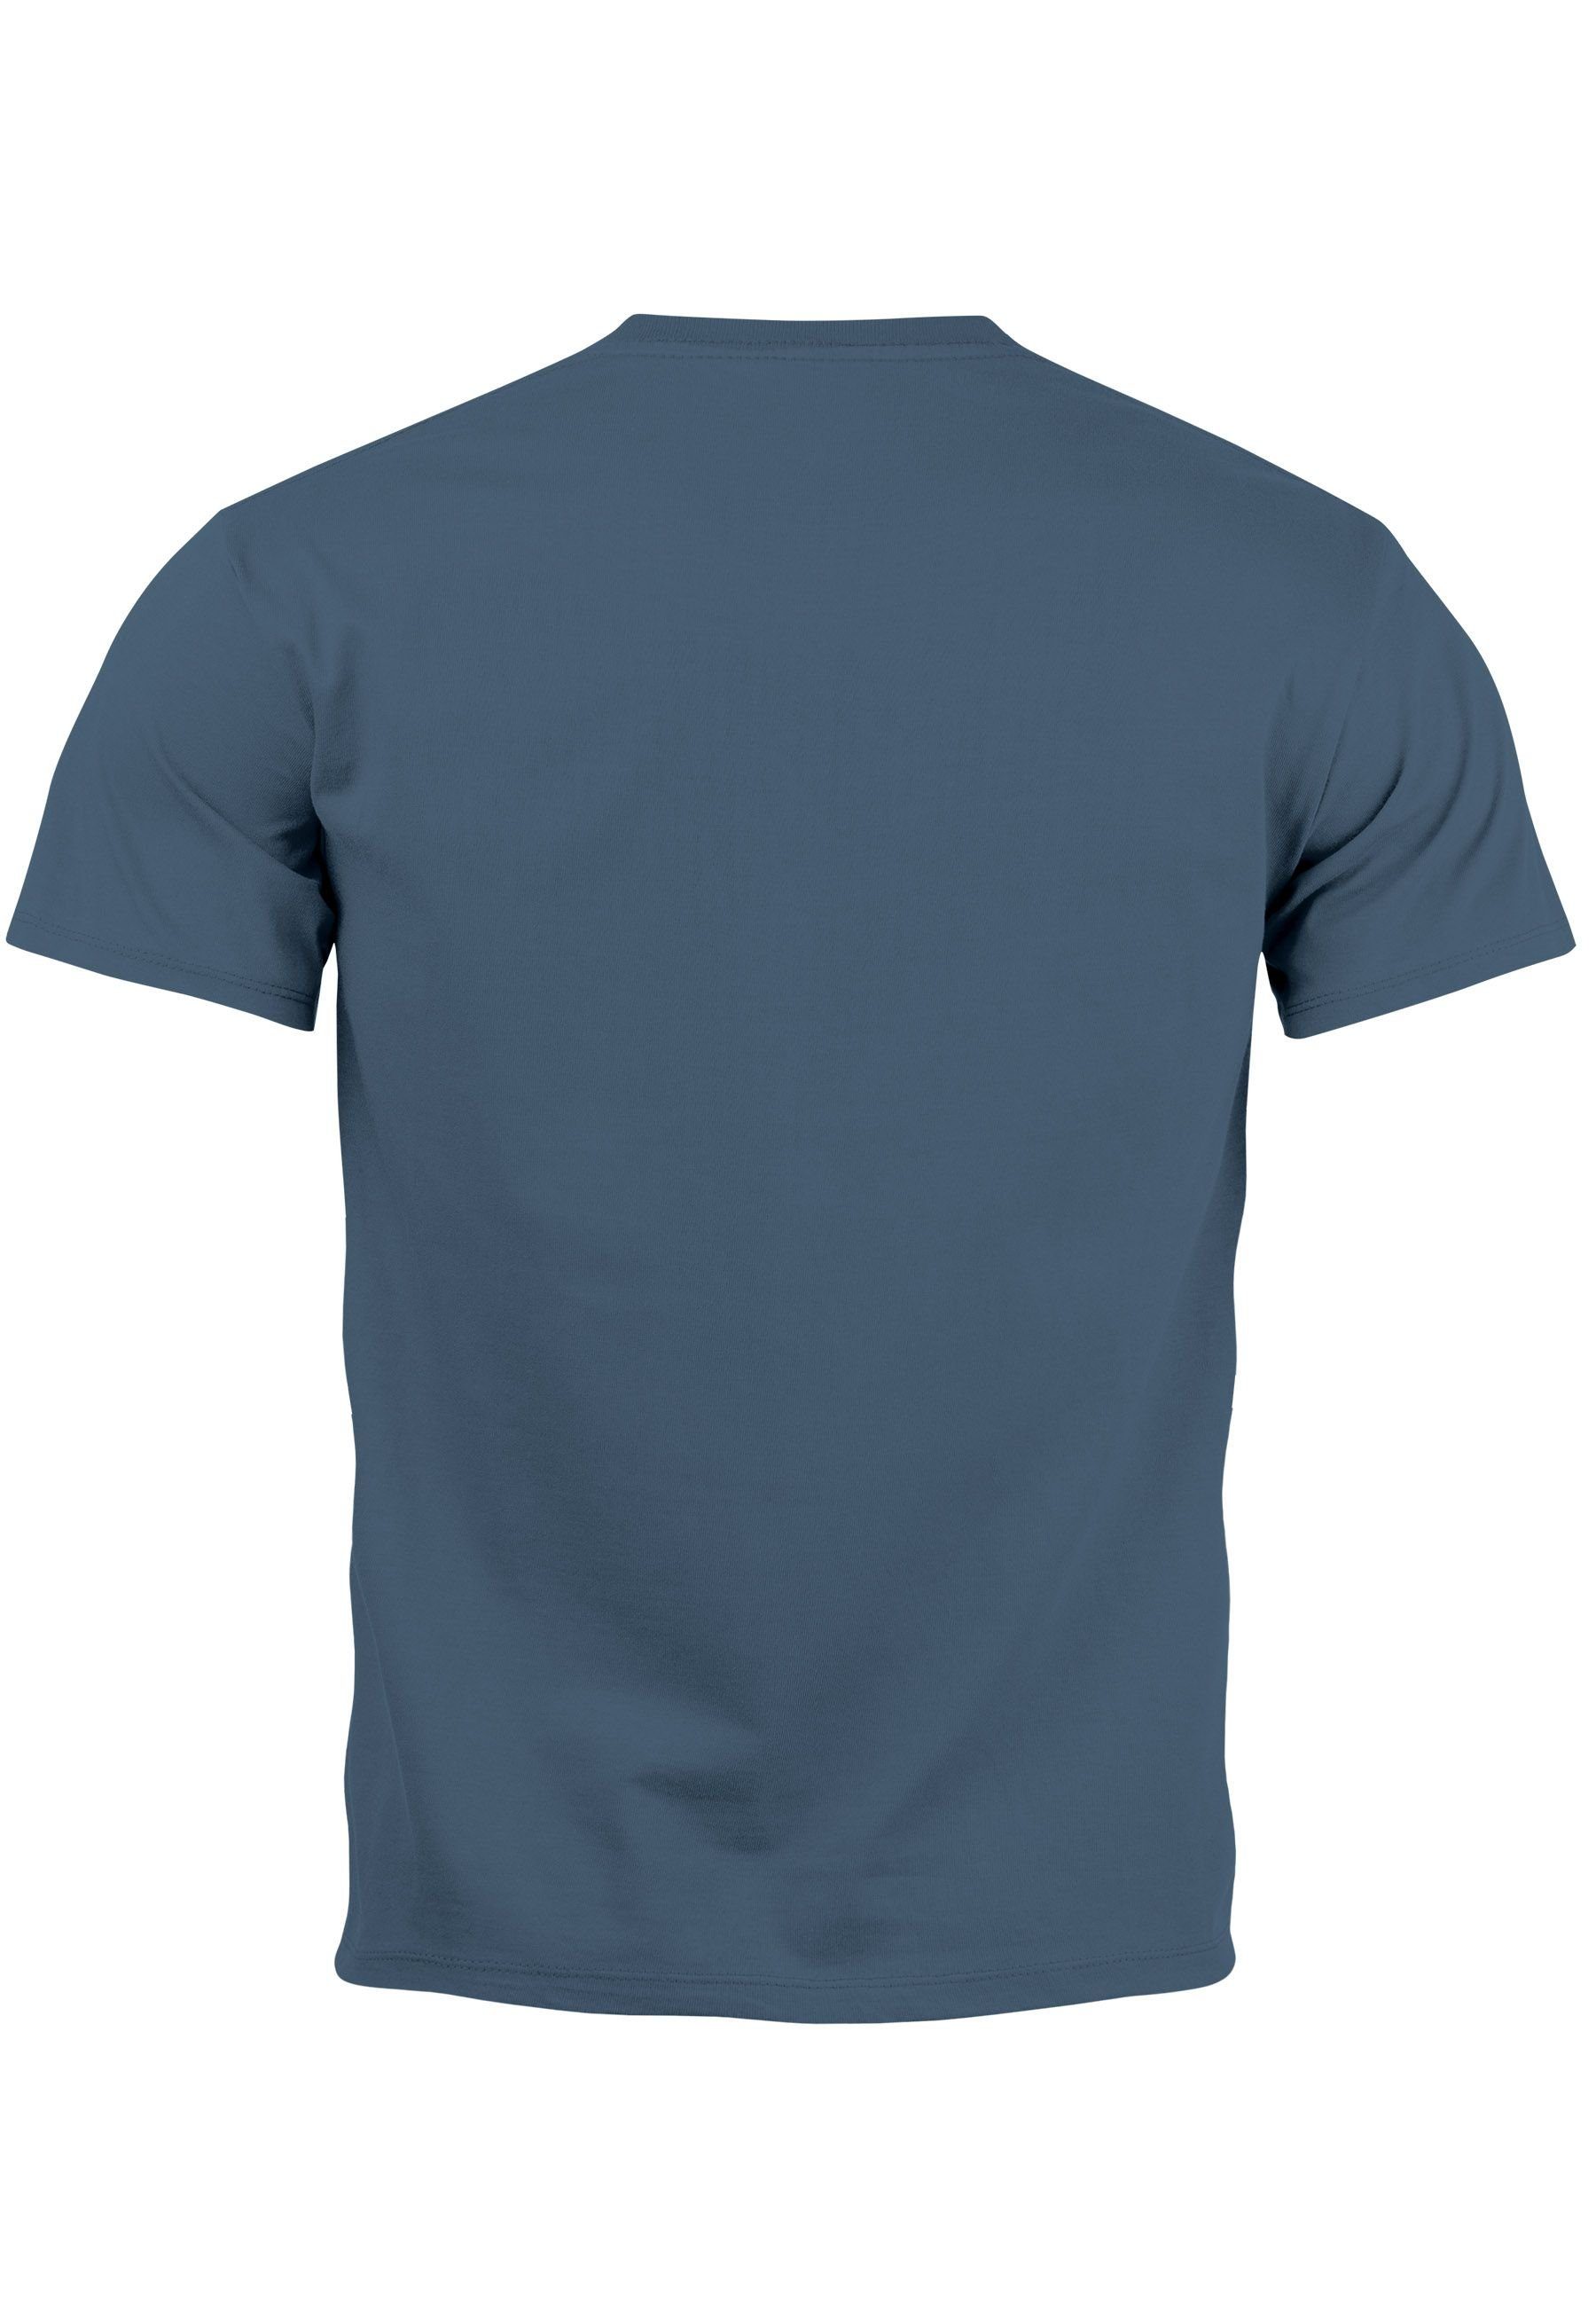 Neverless mit Tiermotiv denim blue Print-Shirt Herren Polygon Wolf Fashion Print Bedruckt T-Shirt Outdoor Grafik